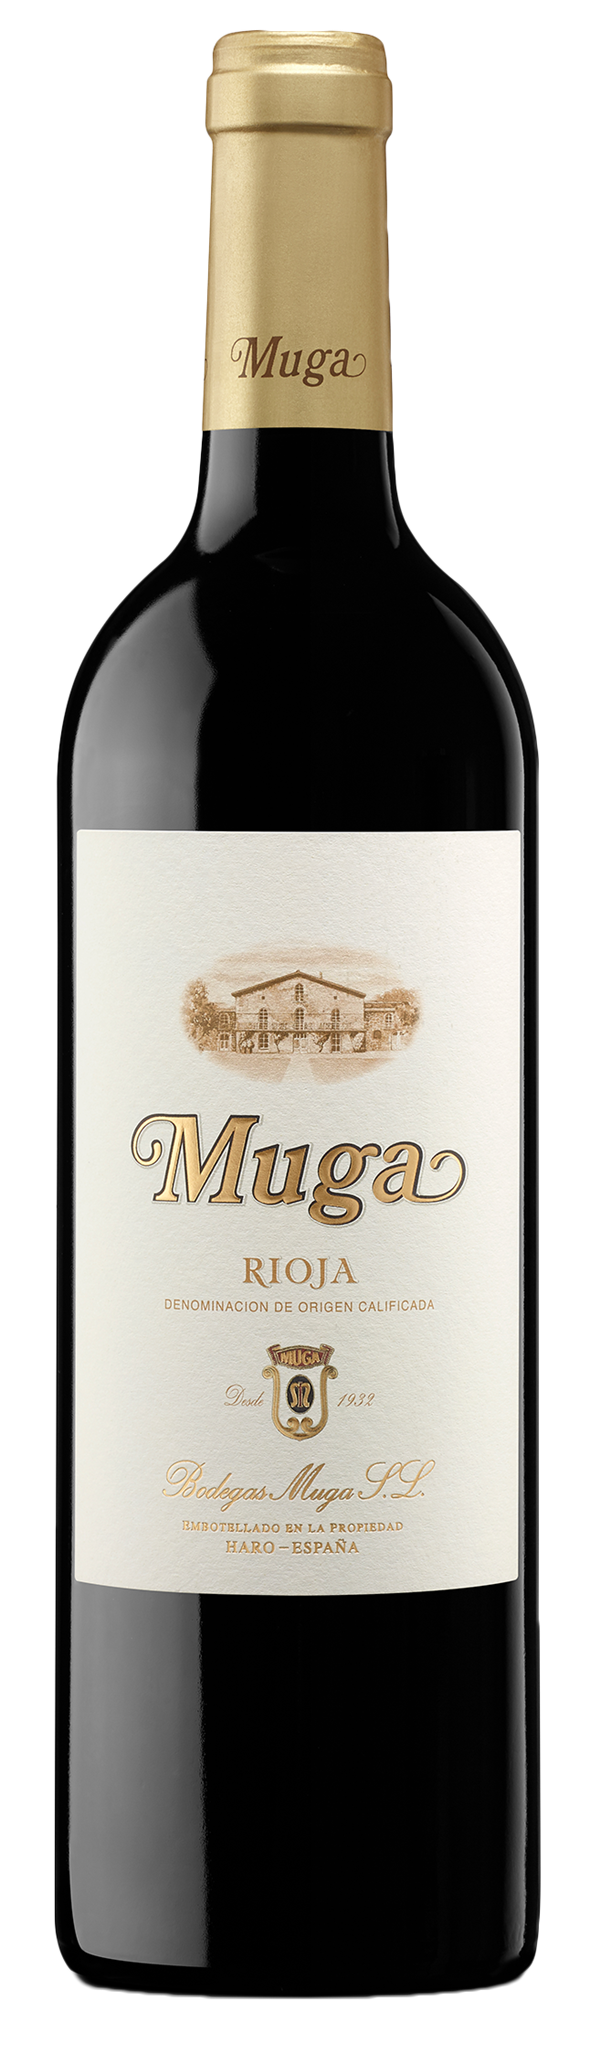 Muga Reserva 2018, Rioja